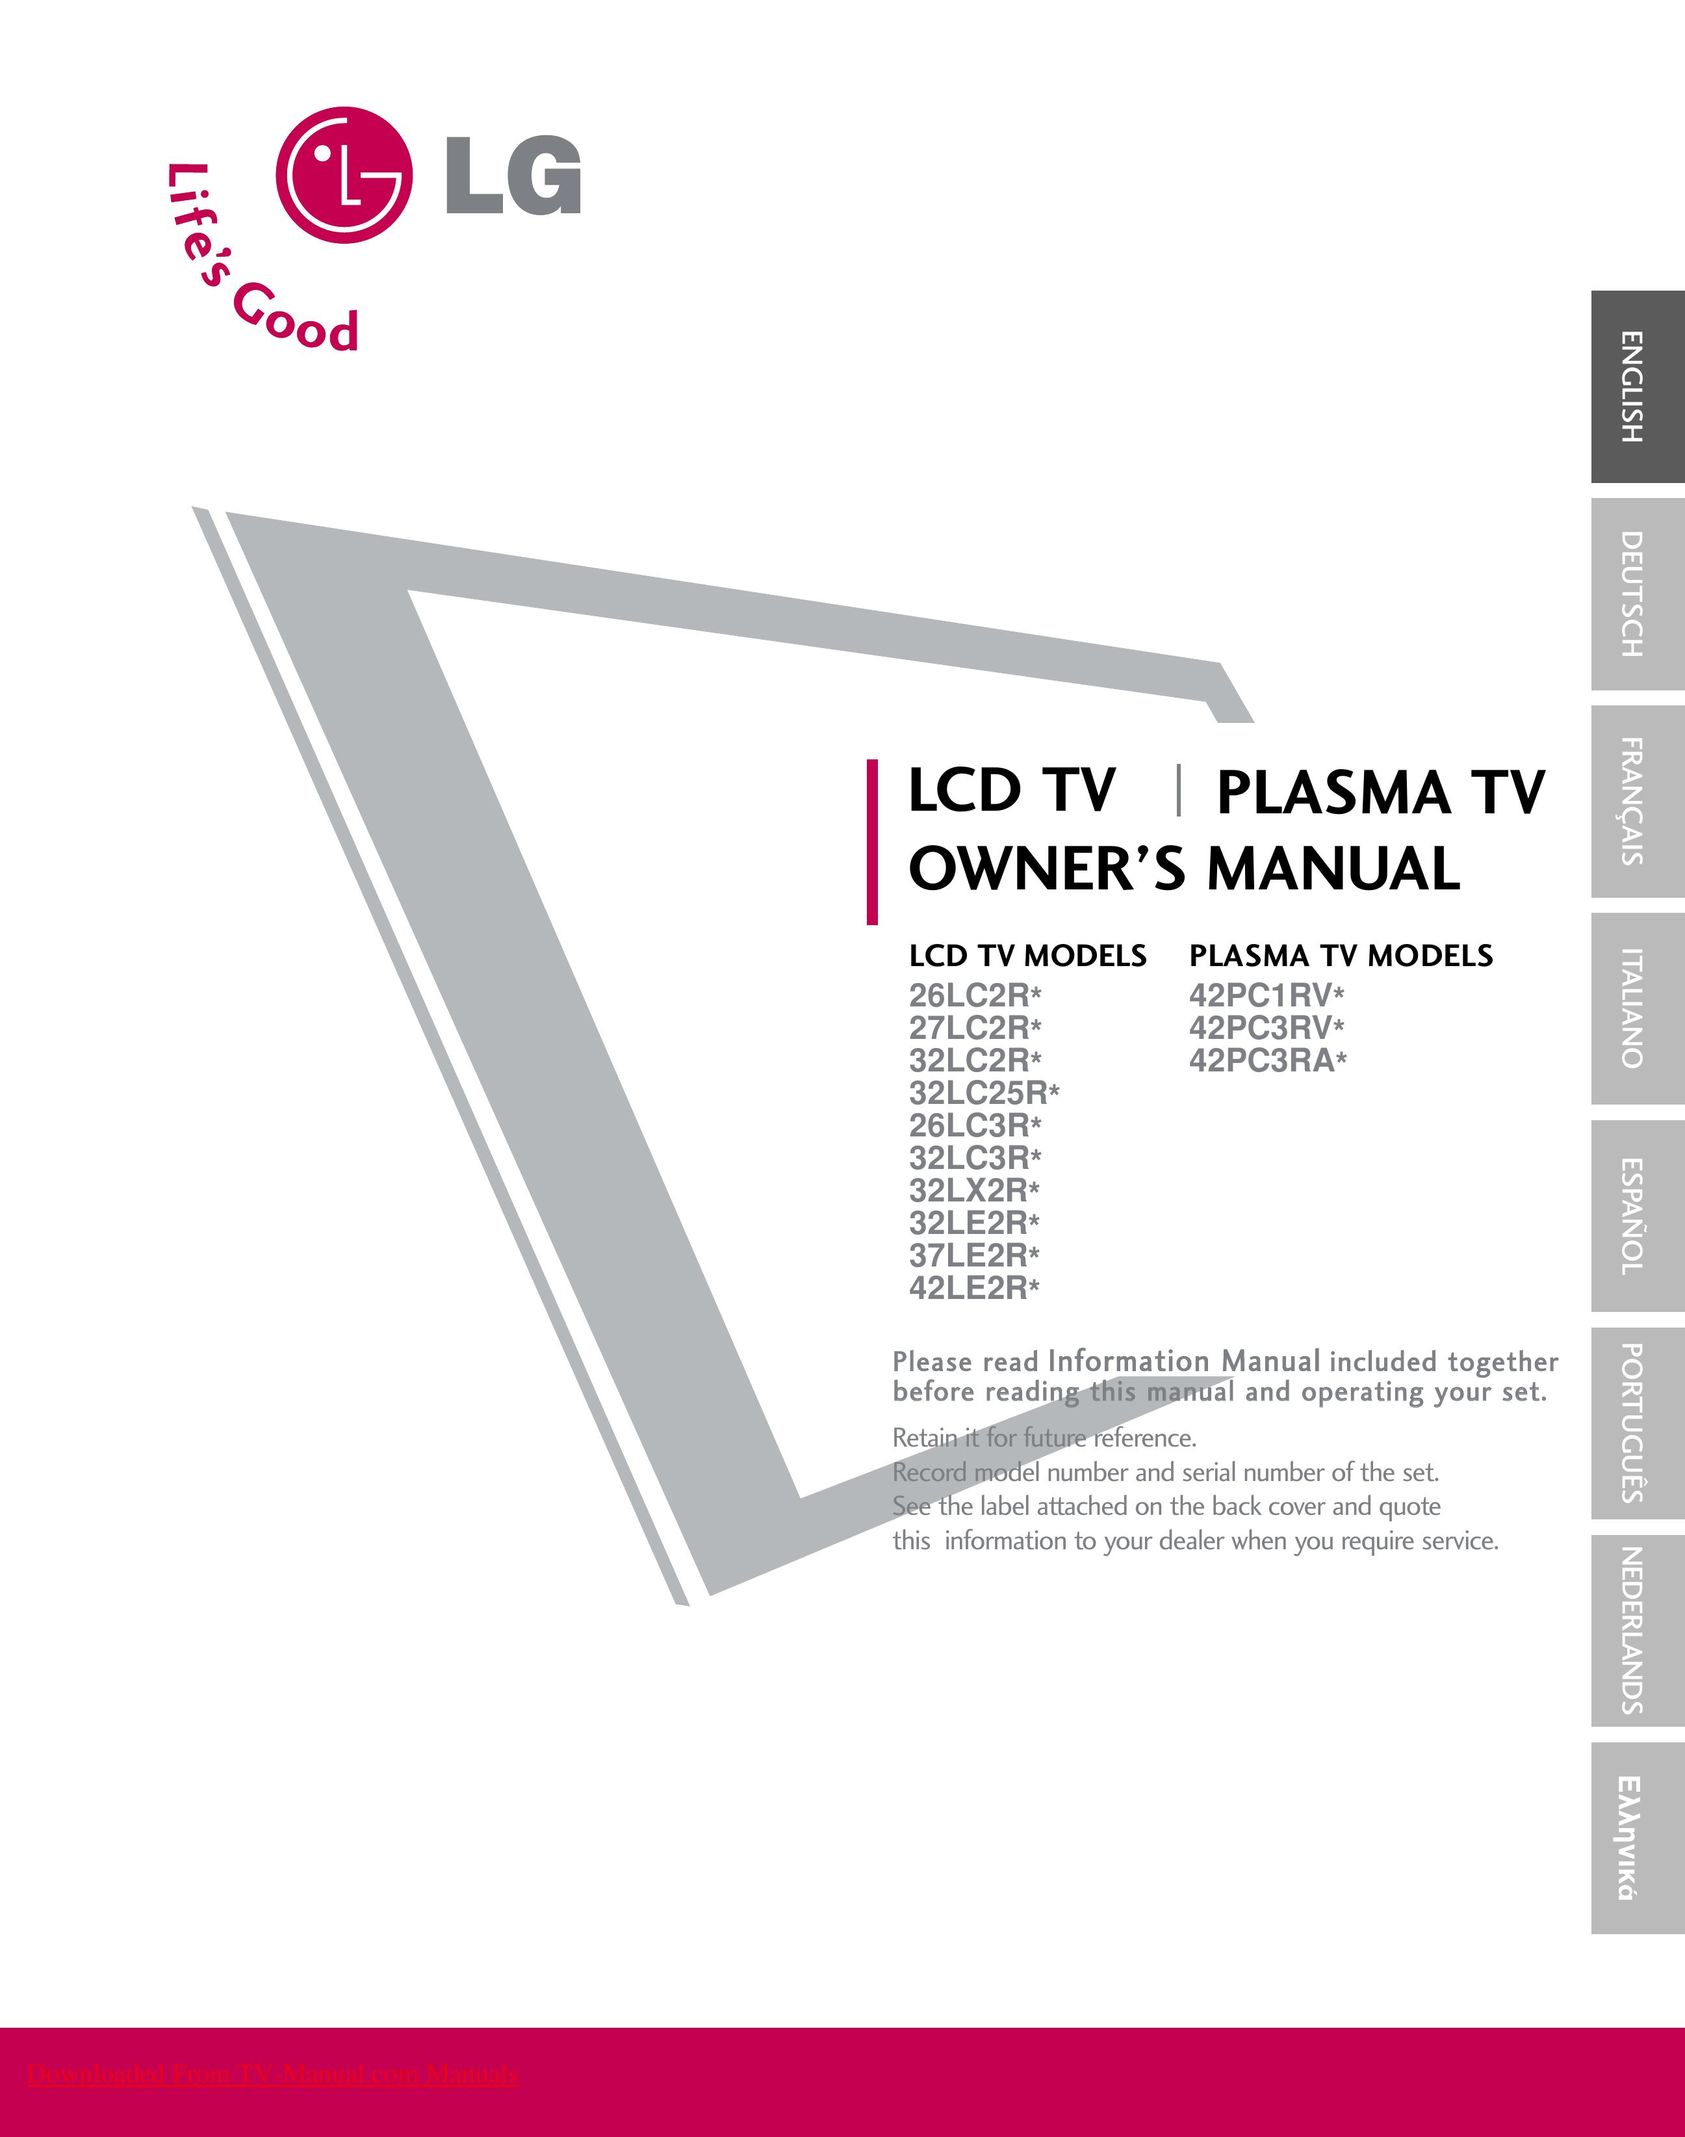 LG Electronics 32LC25R* TV Antenna User Manual